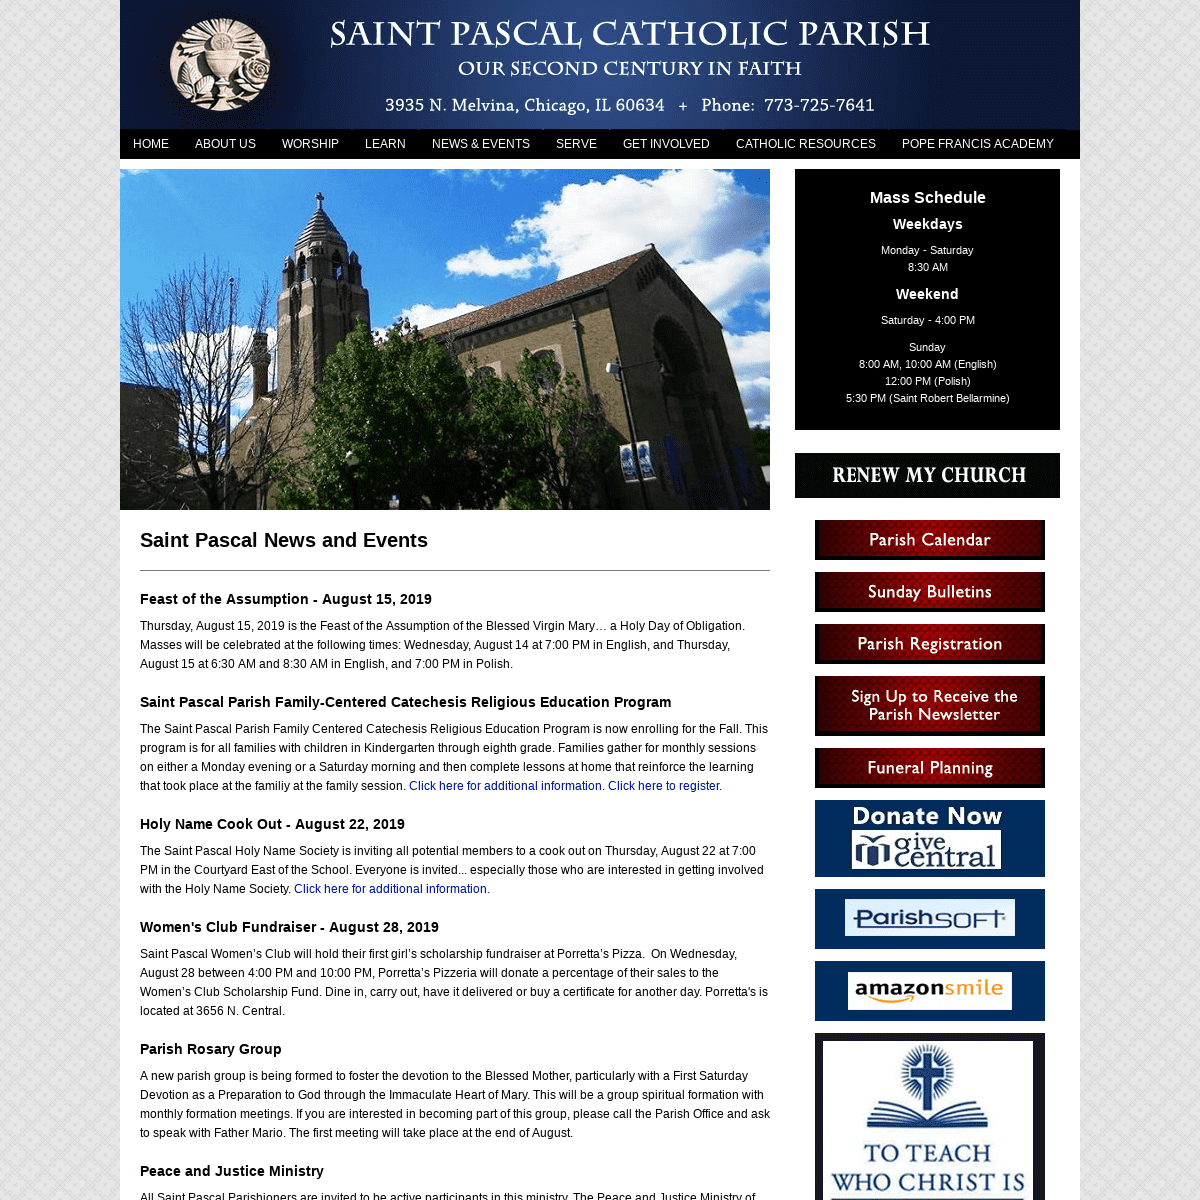 Saint Pascal Parish Website